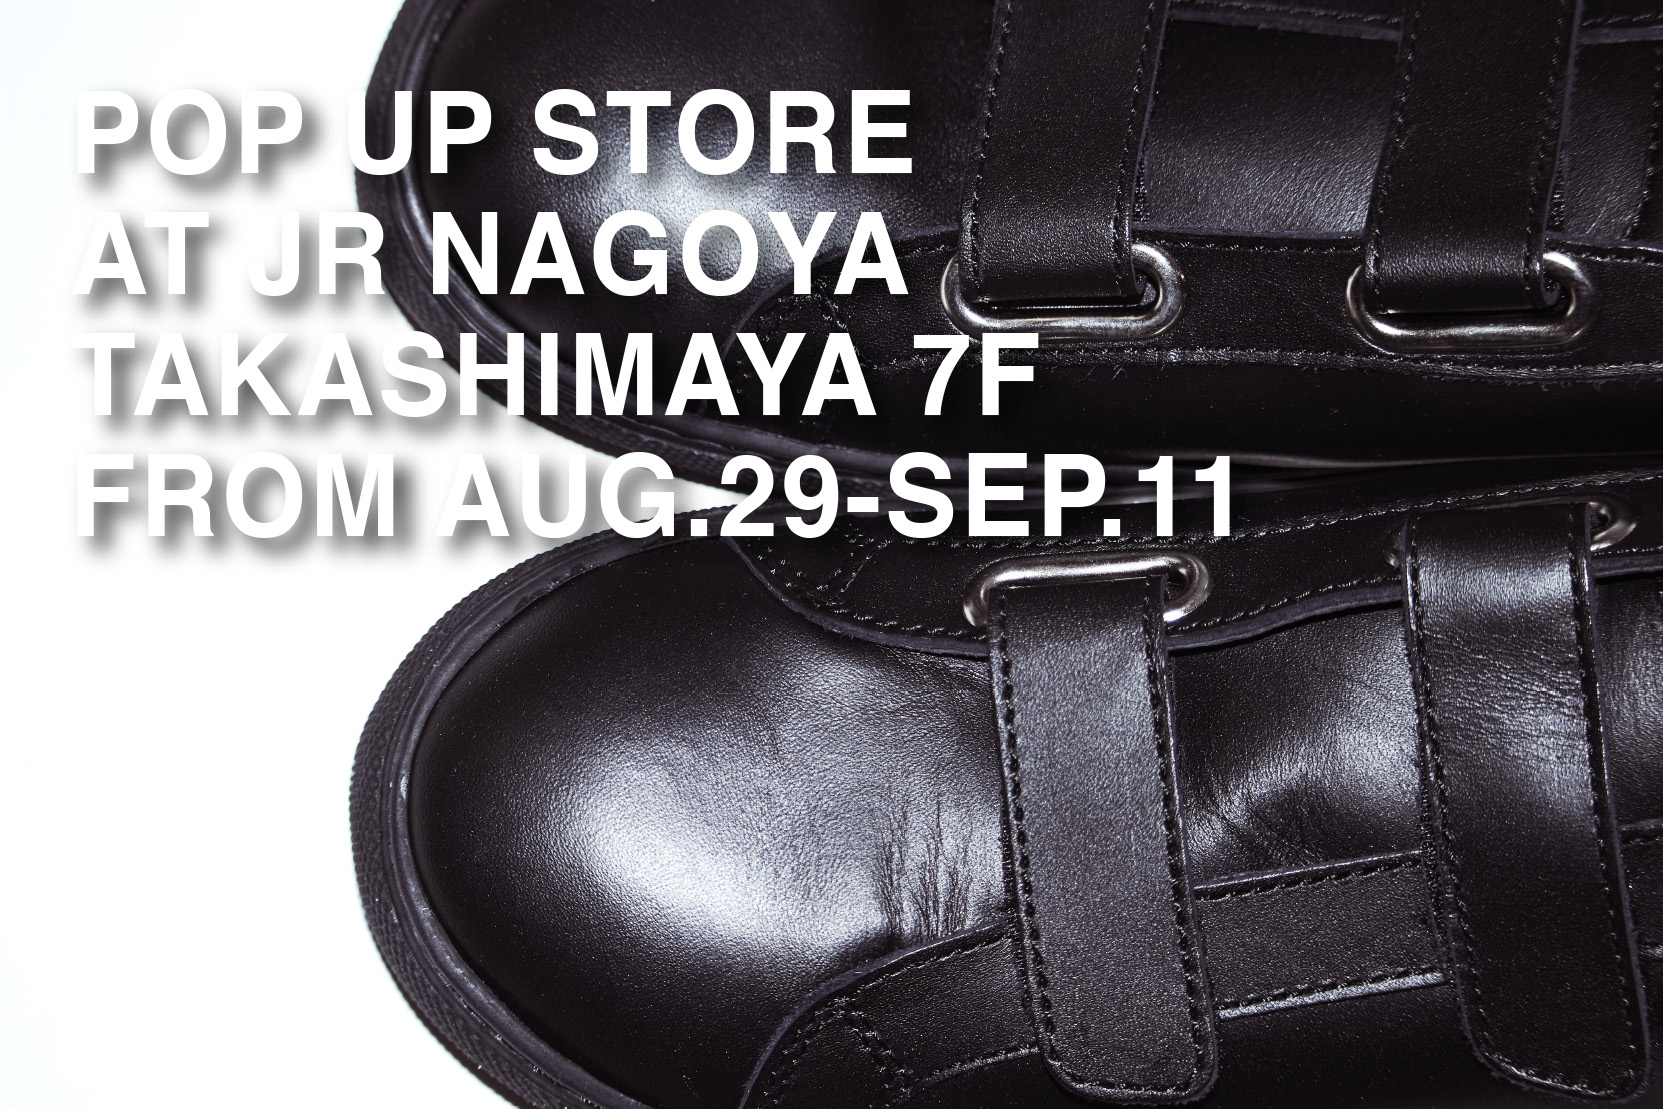 JR NAGOYA TAKASHIMAYA POP UP STORE FROM Aug.29